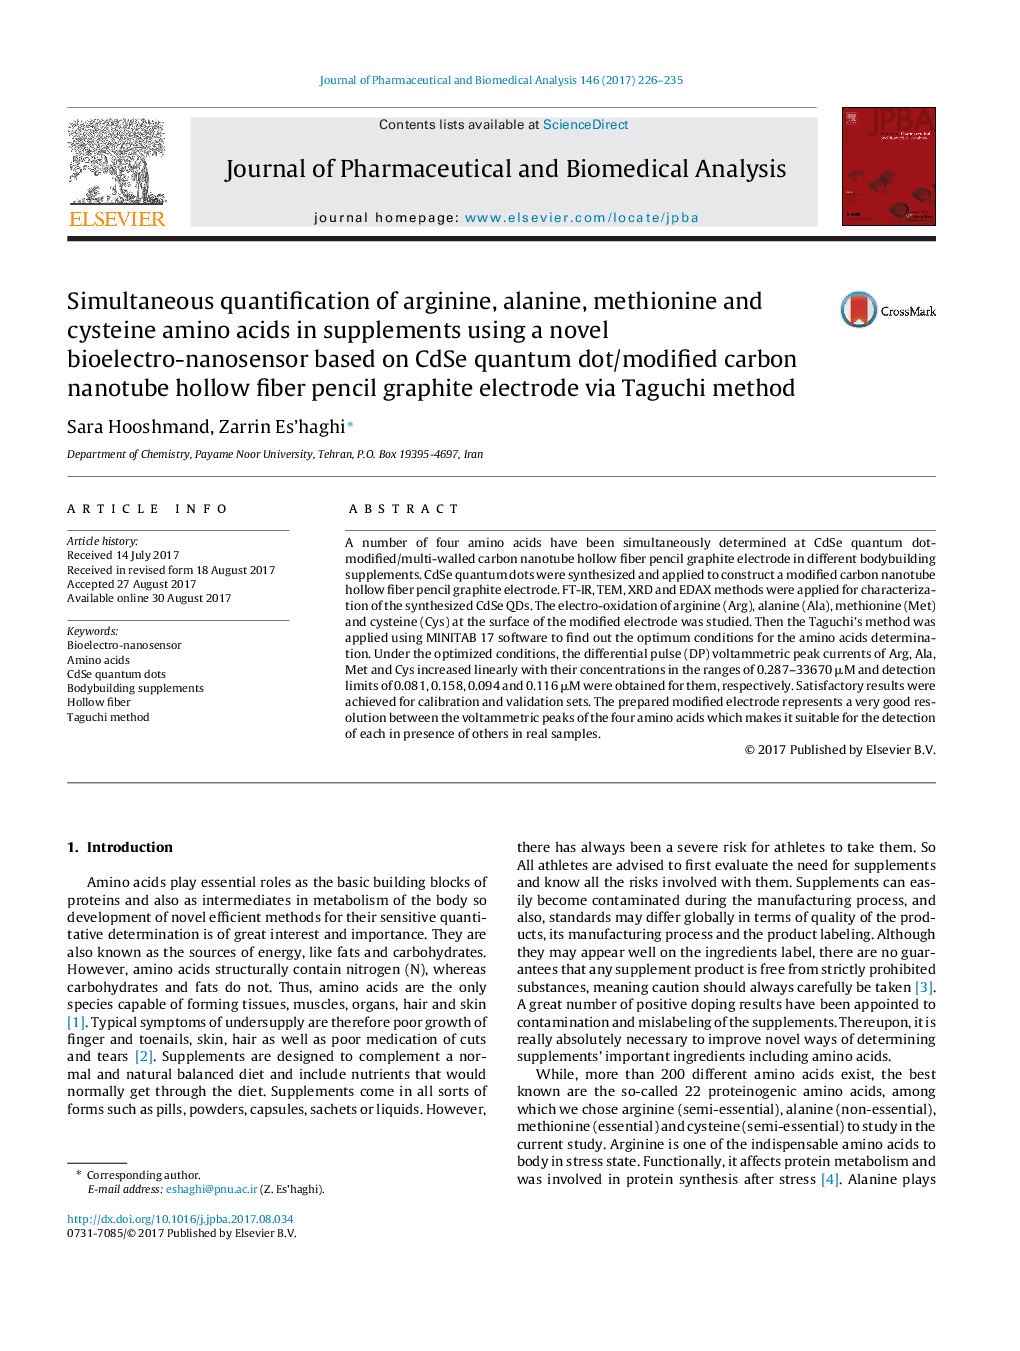 Simultaneous quantification of arginine, alanine, methionine and cysteine amino acids in supplements using a novel bioelectro-nanosensor based on CdSe quantum dot/modified carbon nanotube hollow fiber pencil graphite electrode via Taguchi method